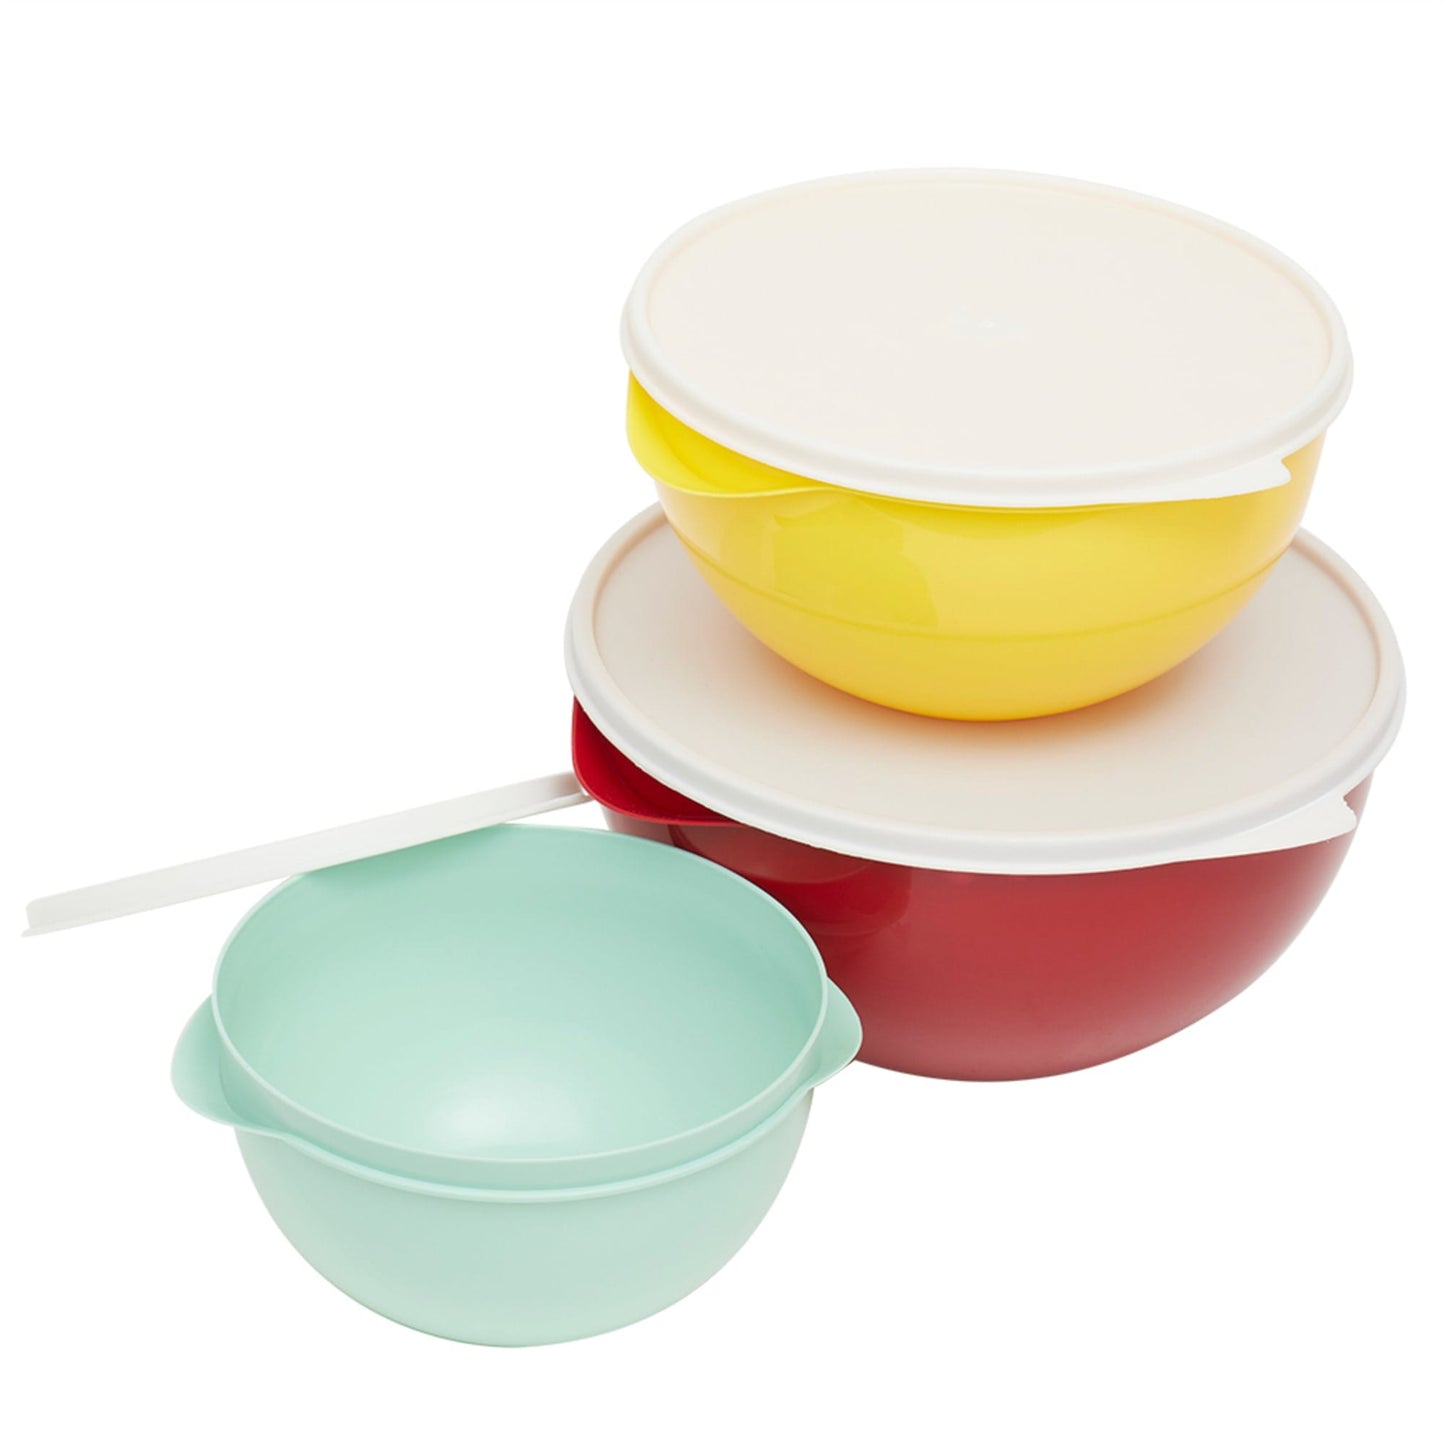  Tupperware Deluxe Modular Nesting Bowls Medium Set of 3 : Home  & Kitchen